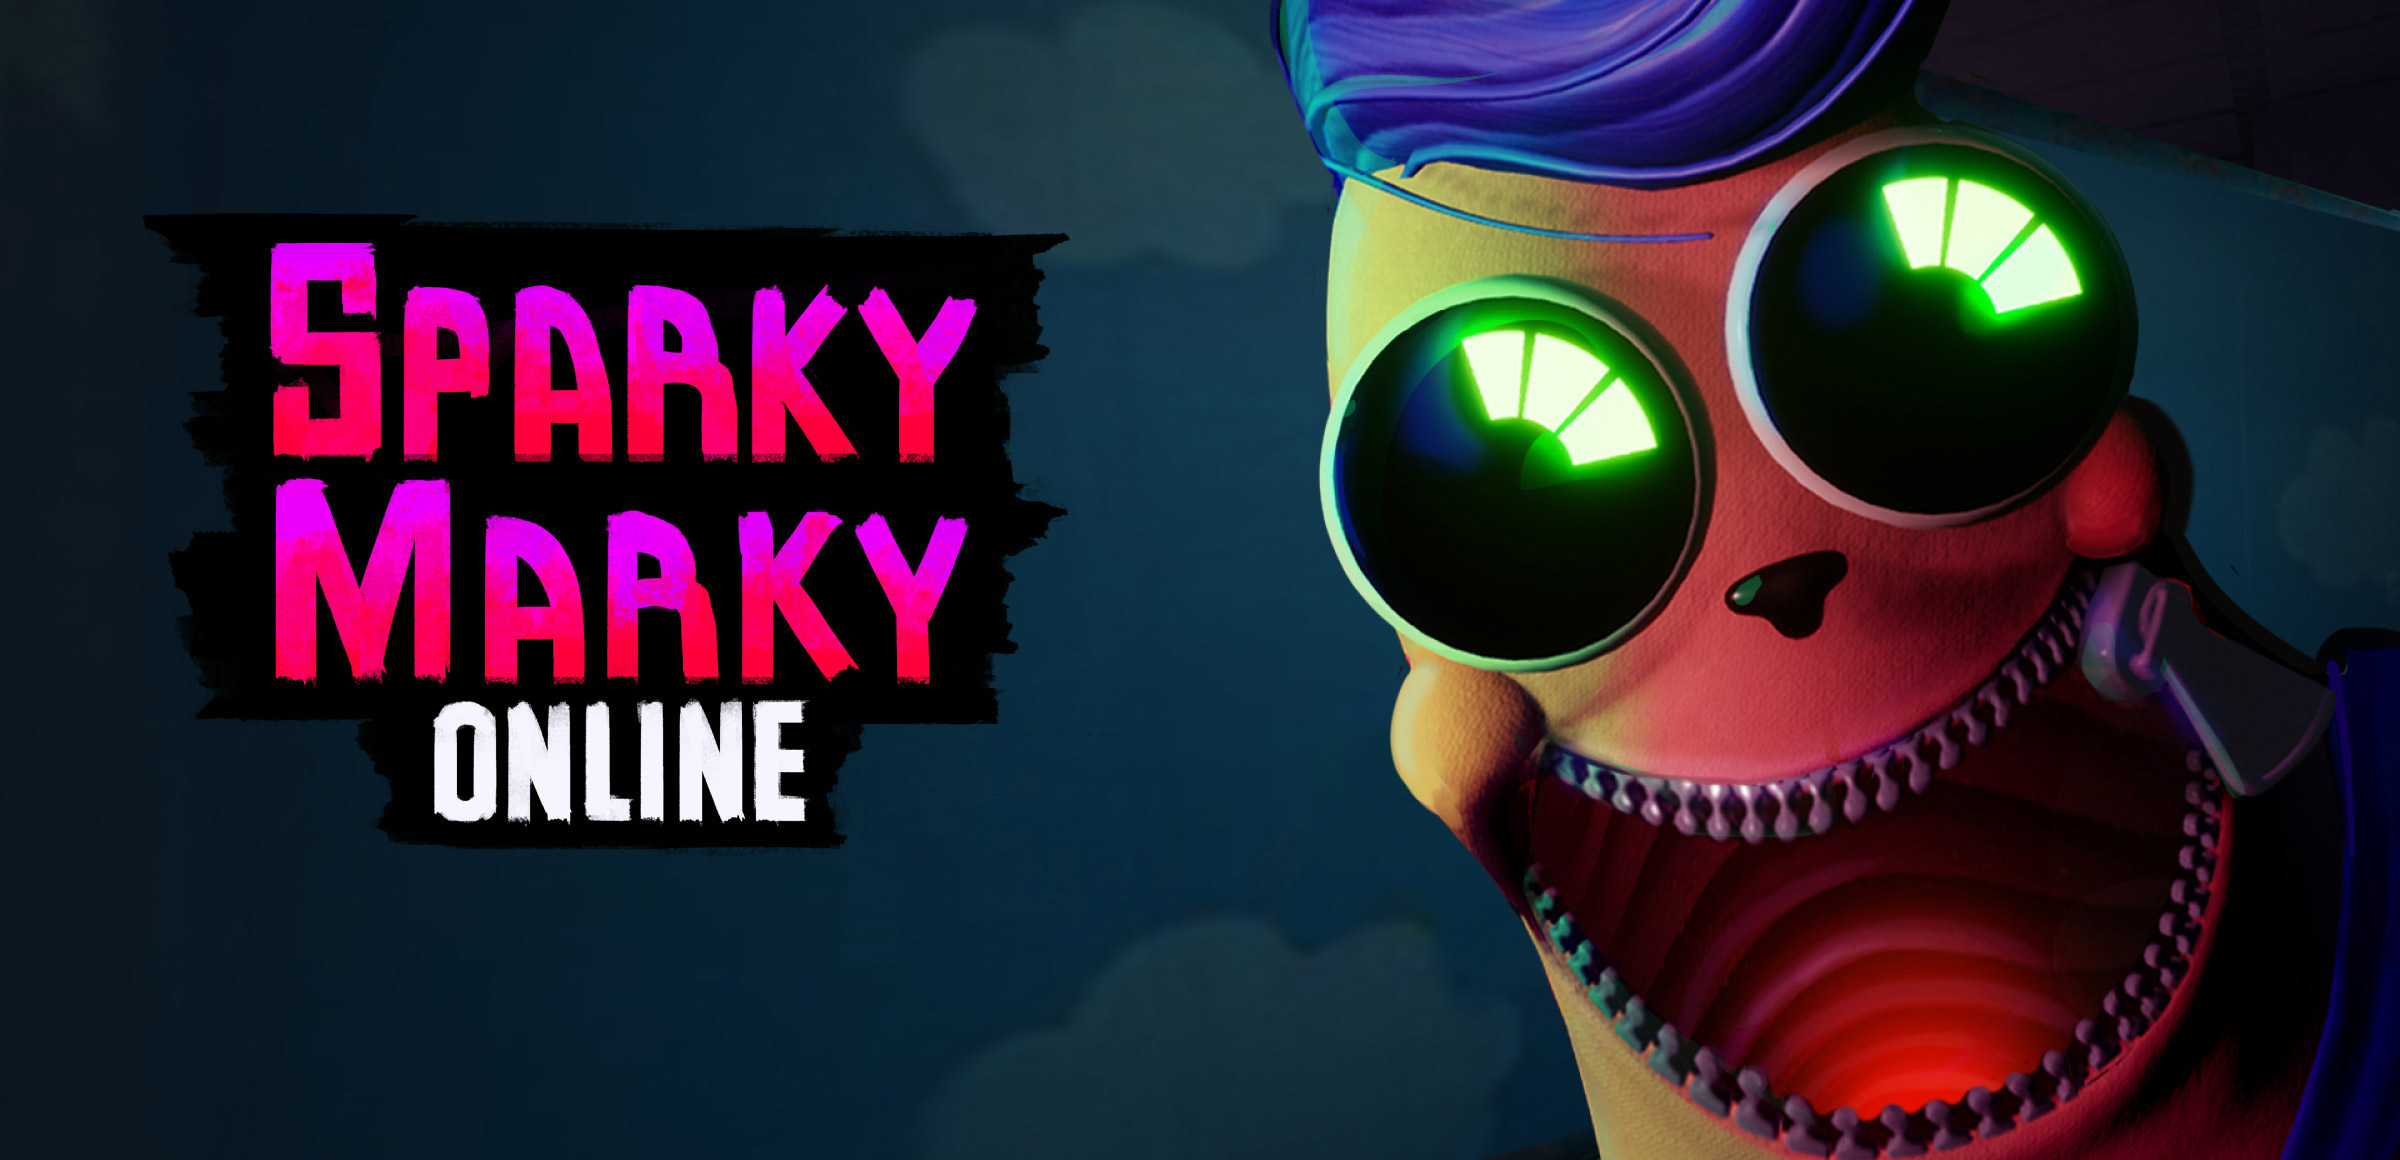 Sparky Marky Online. Add to wishlist on Steam